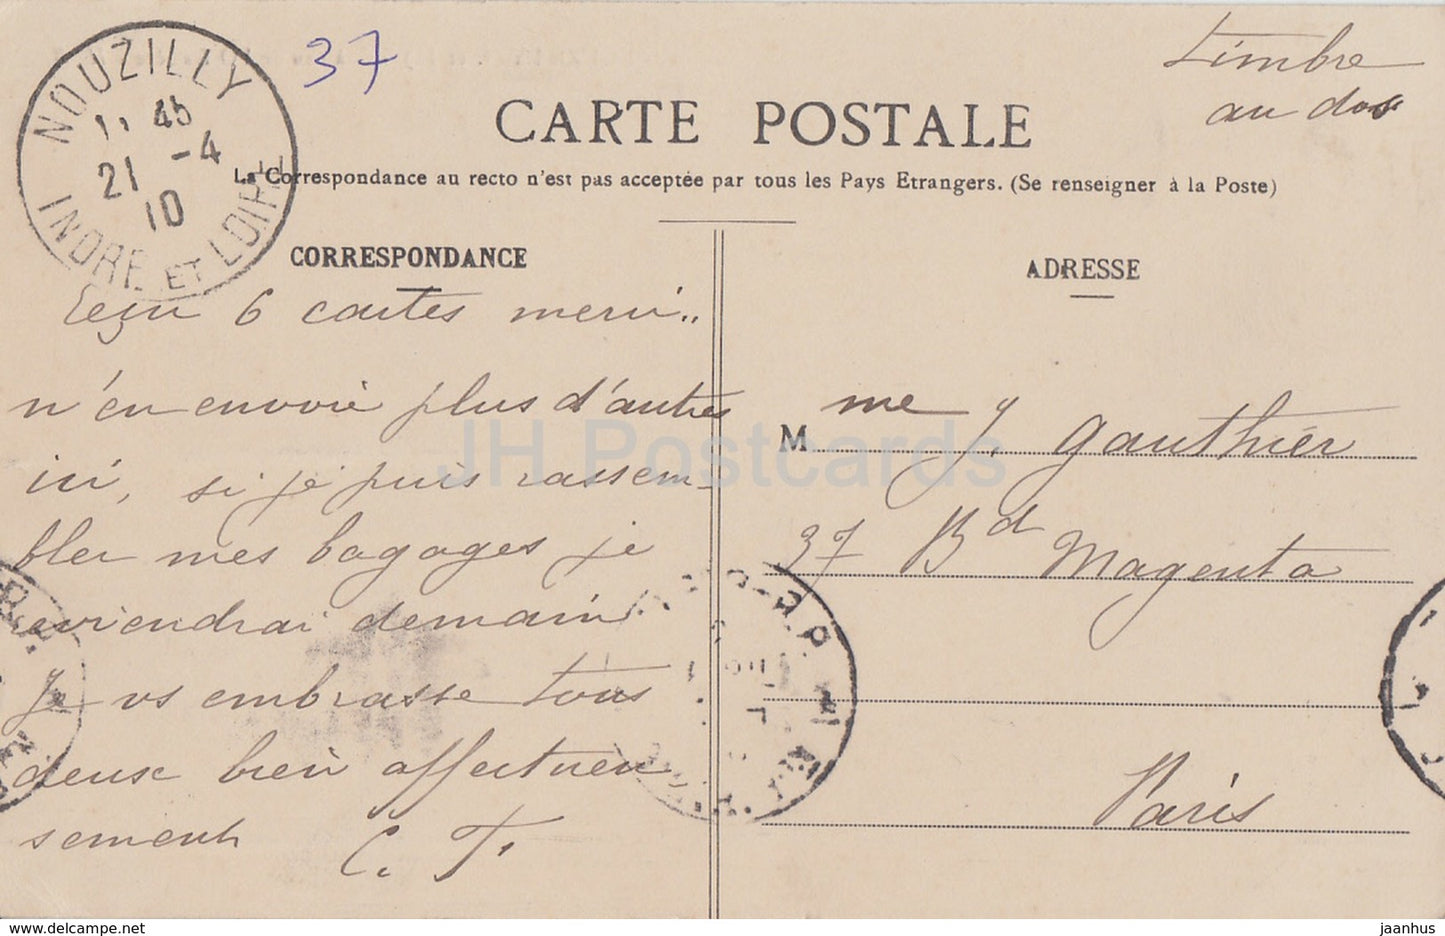 Nouzilly - Chateau de l'Orfraisiere - castle - old postcard - 1910 - France - used